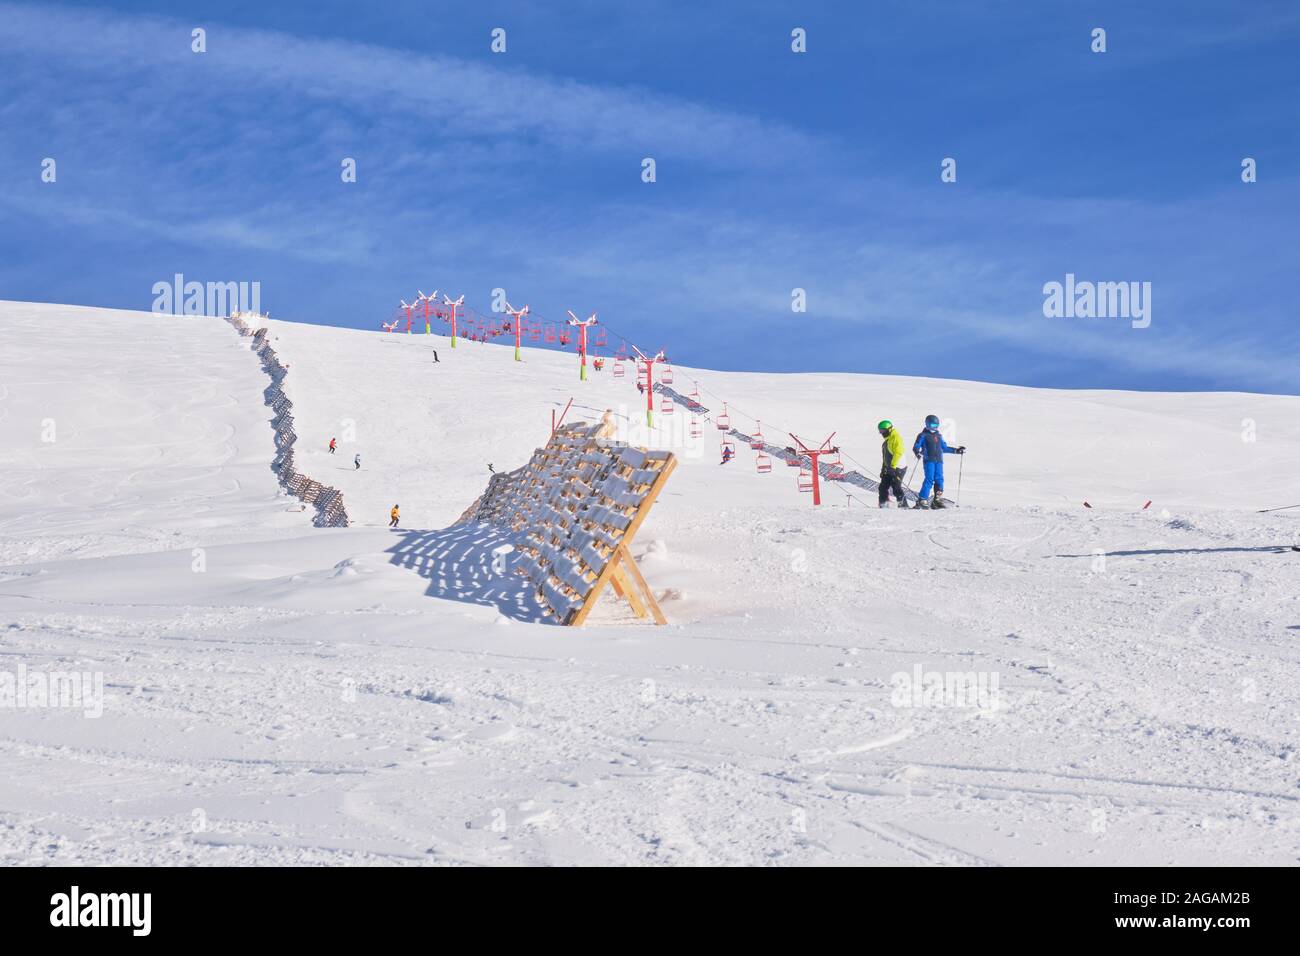 Sinaia, Romania - December 15, 2019: Skiers in Valea Dorului, Cota 2000,  Sinaia resort, Romania, on a sunny day with blue sky Stock Photo - Alamy